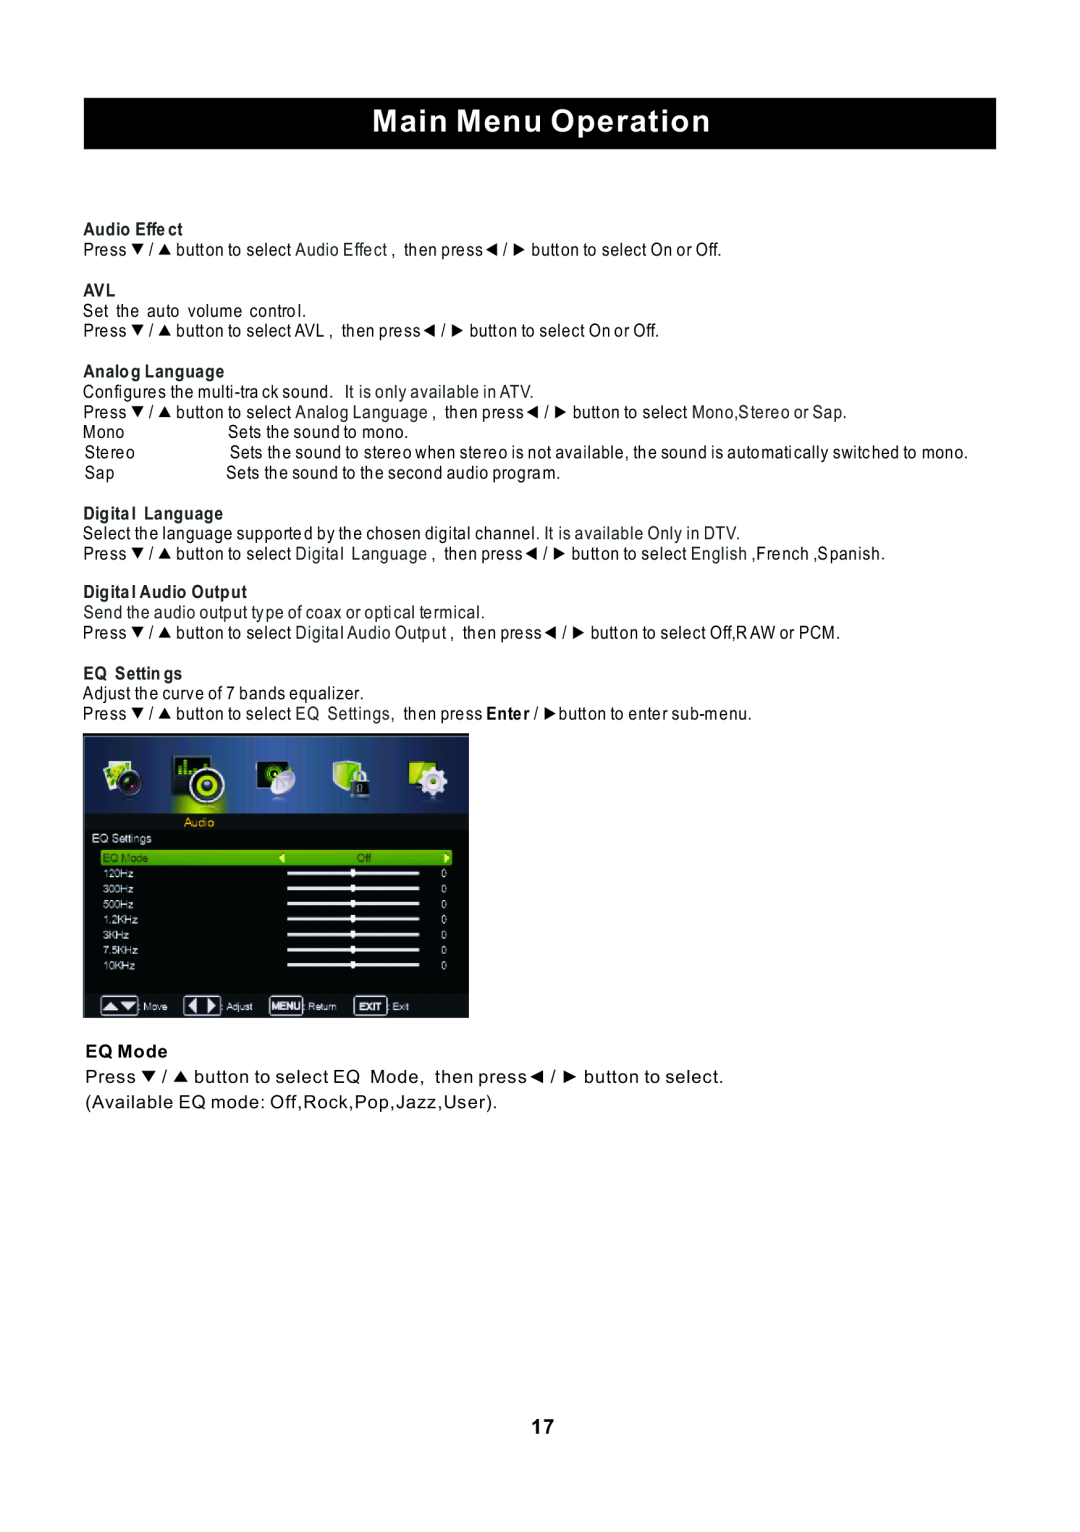 ProScan RLED2445A-B Main Menu Operation, Audio Effe ct, Analog Language, Digita l Language, Digita l Audio Output, EQ Mode 